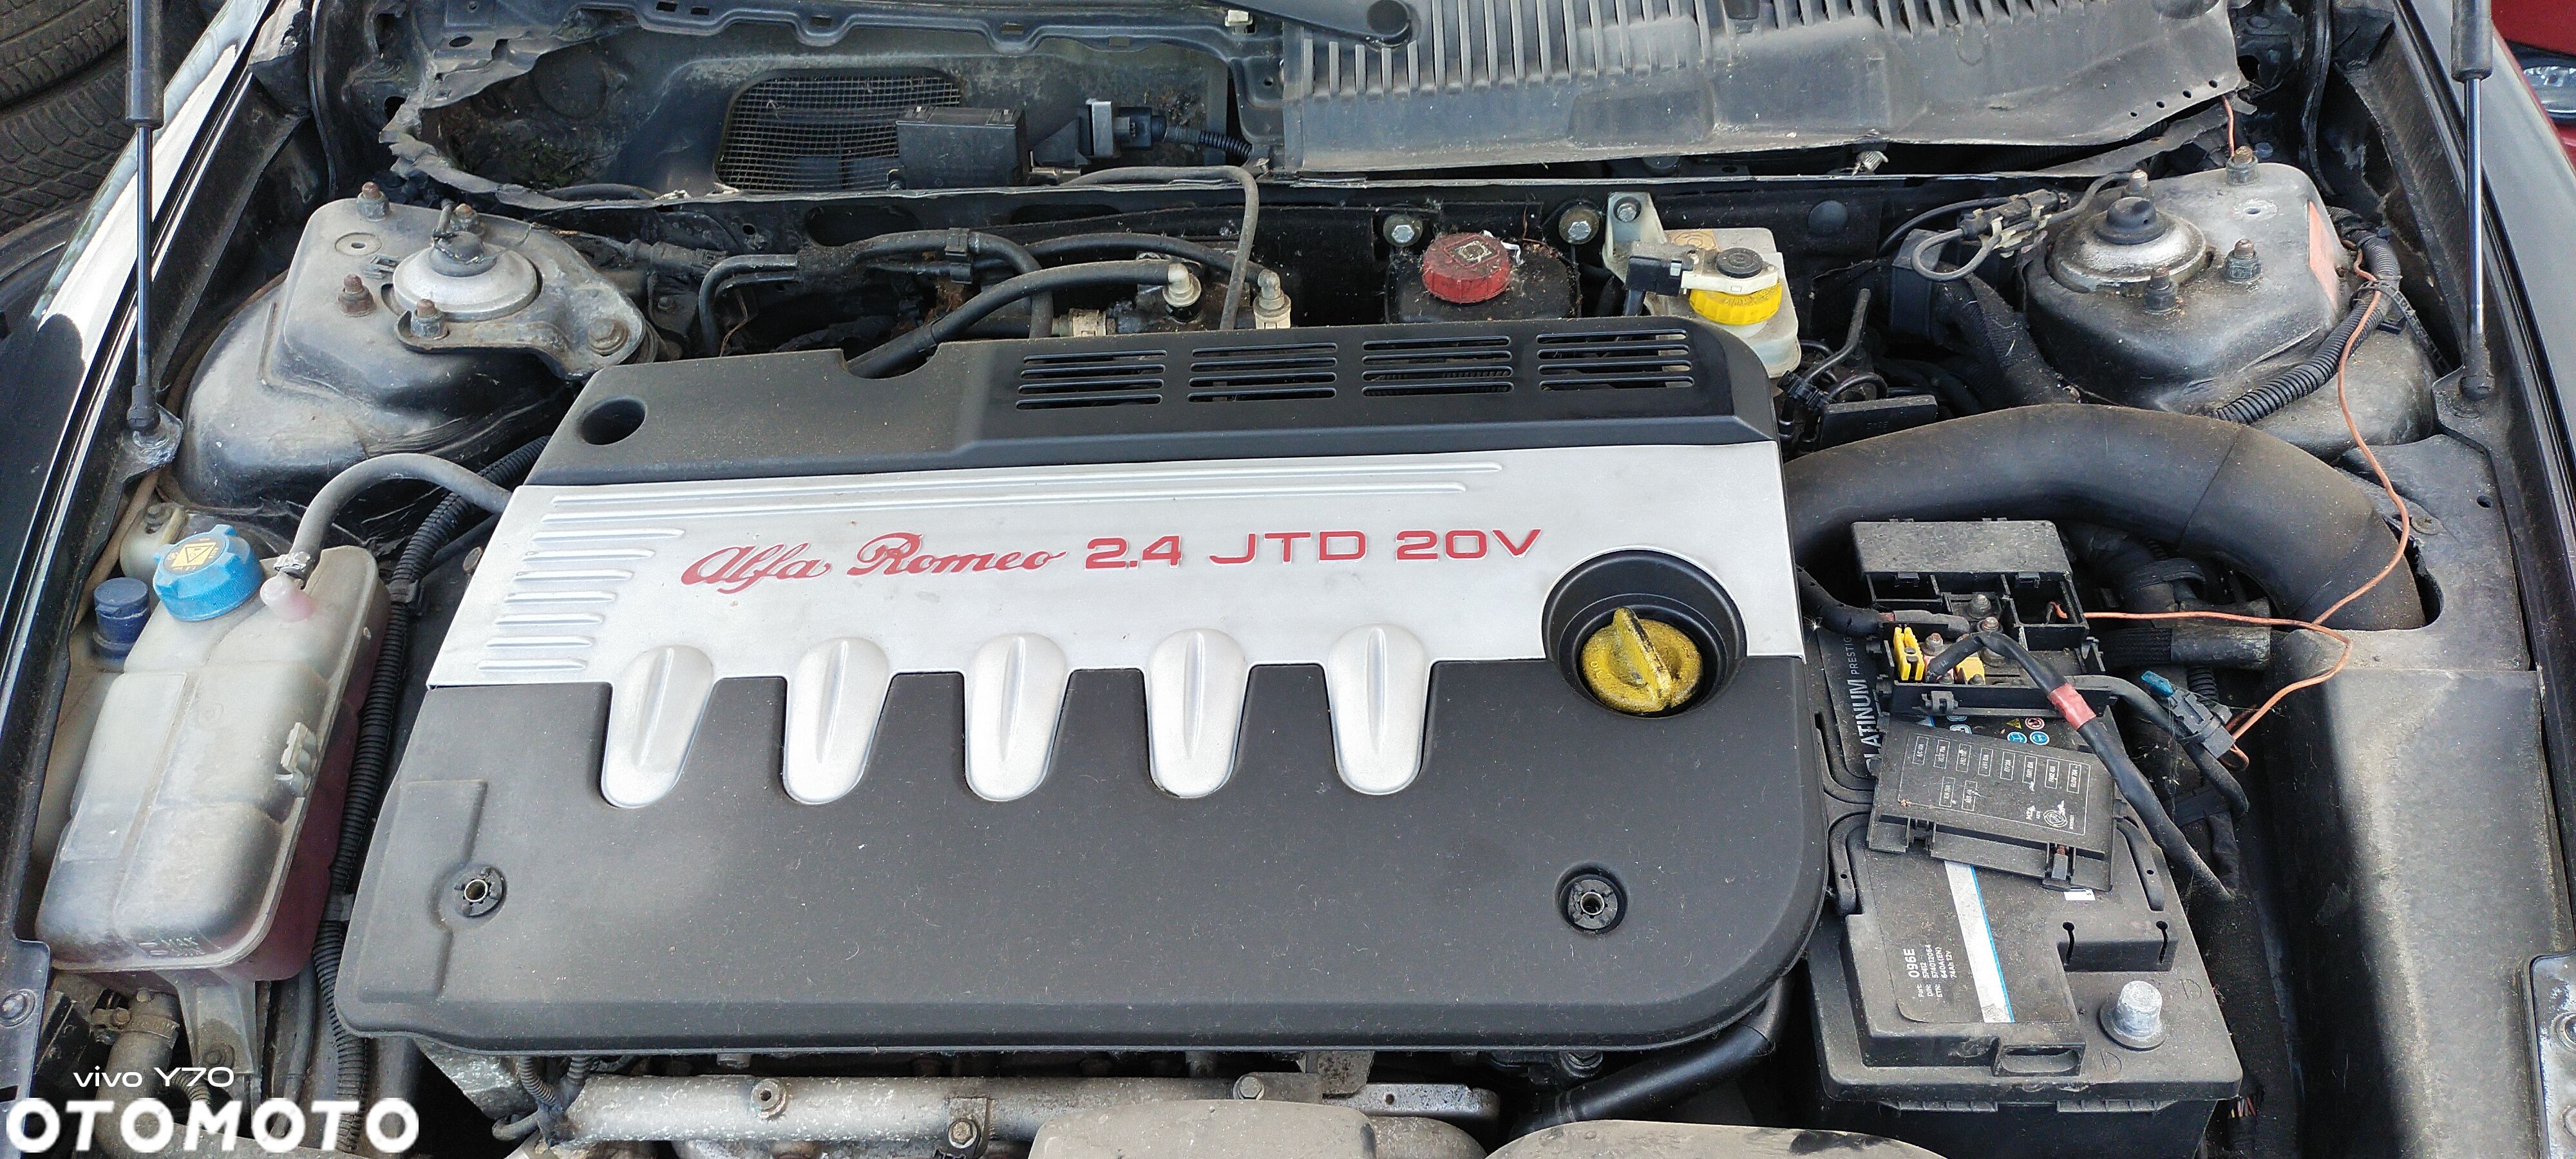 Silnik 2.4 JTD 20v stan bdb 116 tyś km 175 hp - 1